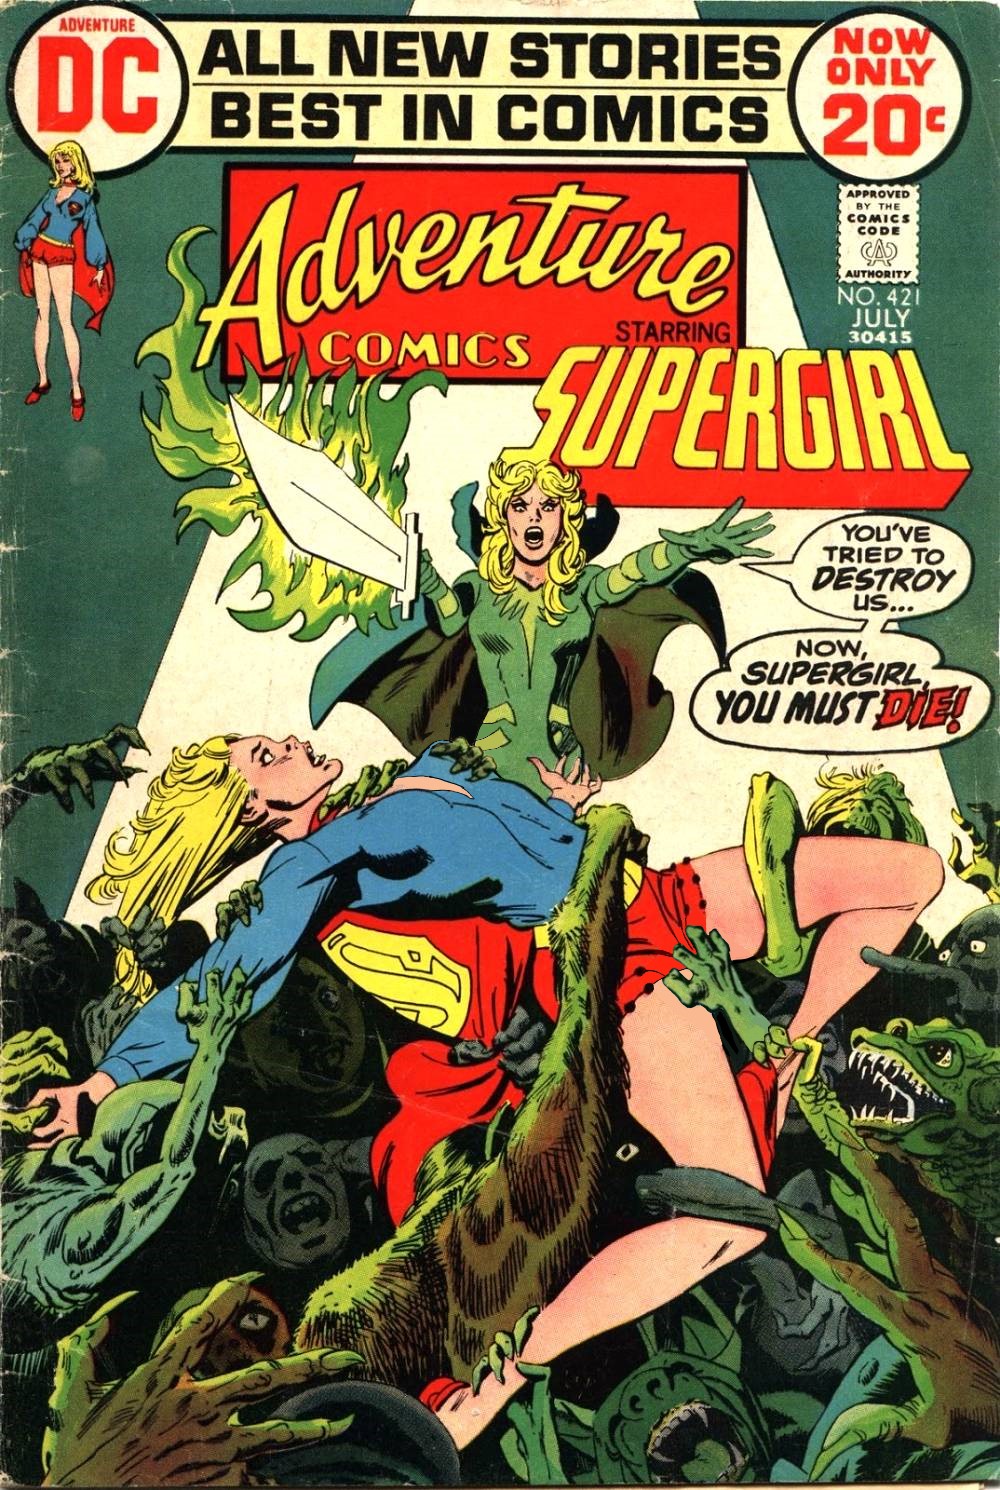 Adventure Comics #421 1972 - Bob Oksner.jpg